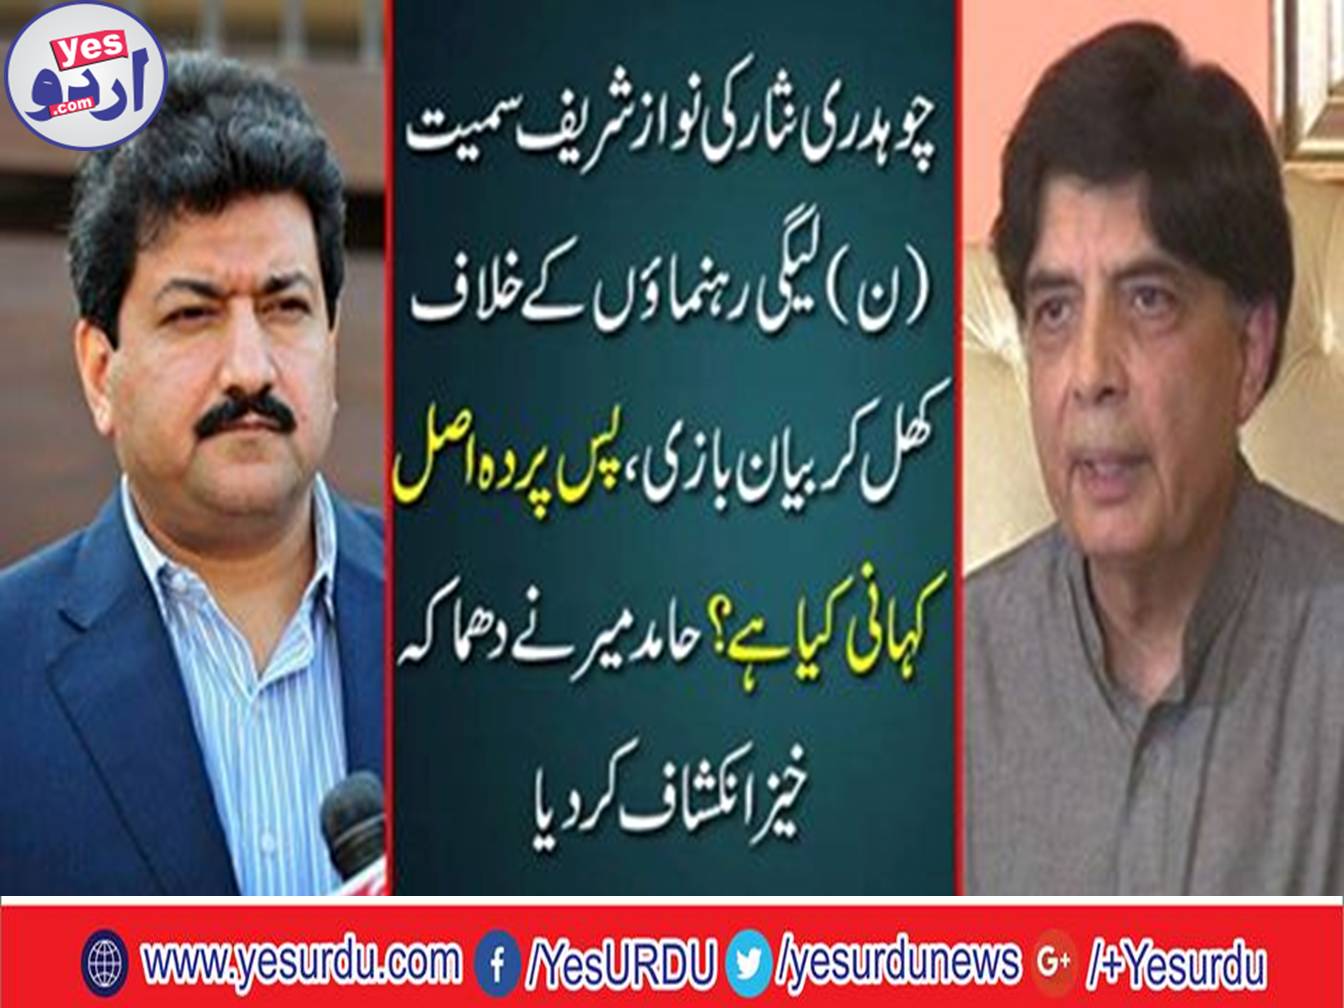 Hamid Mir revealed explosives